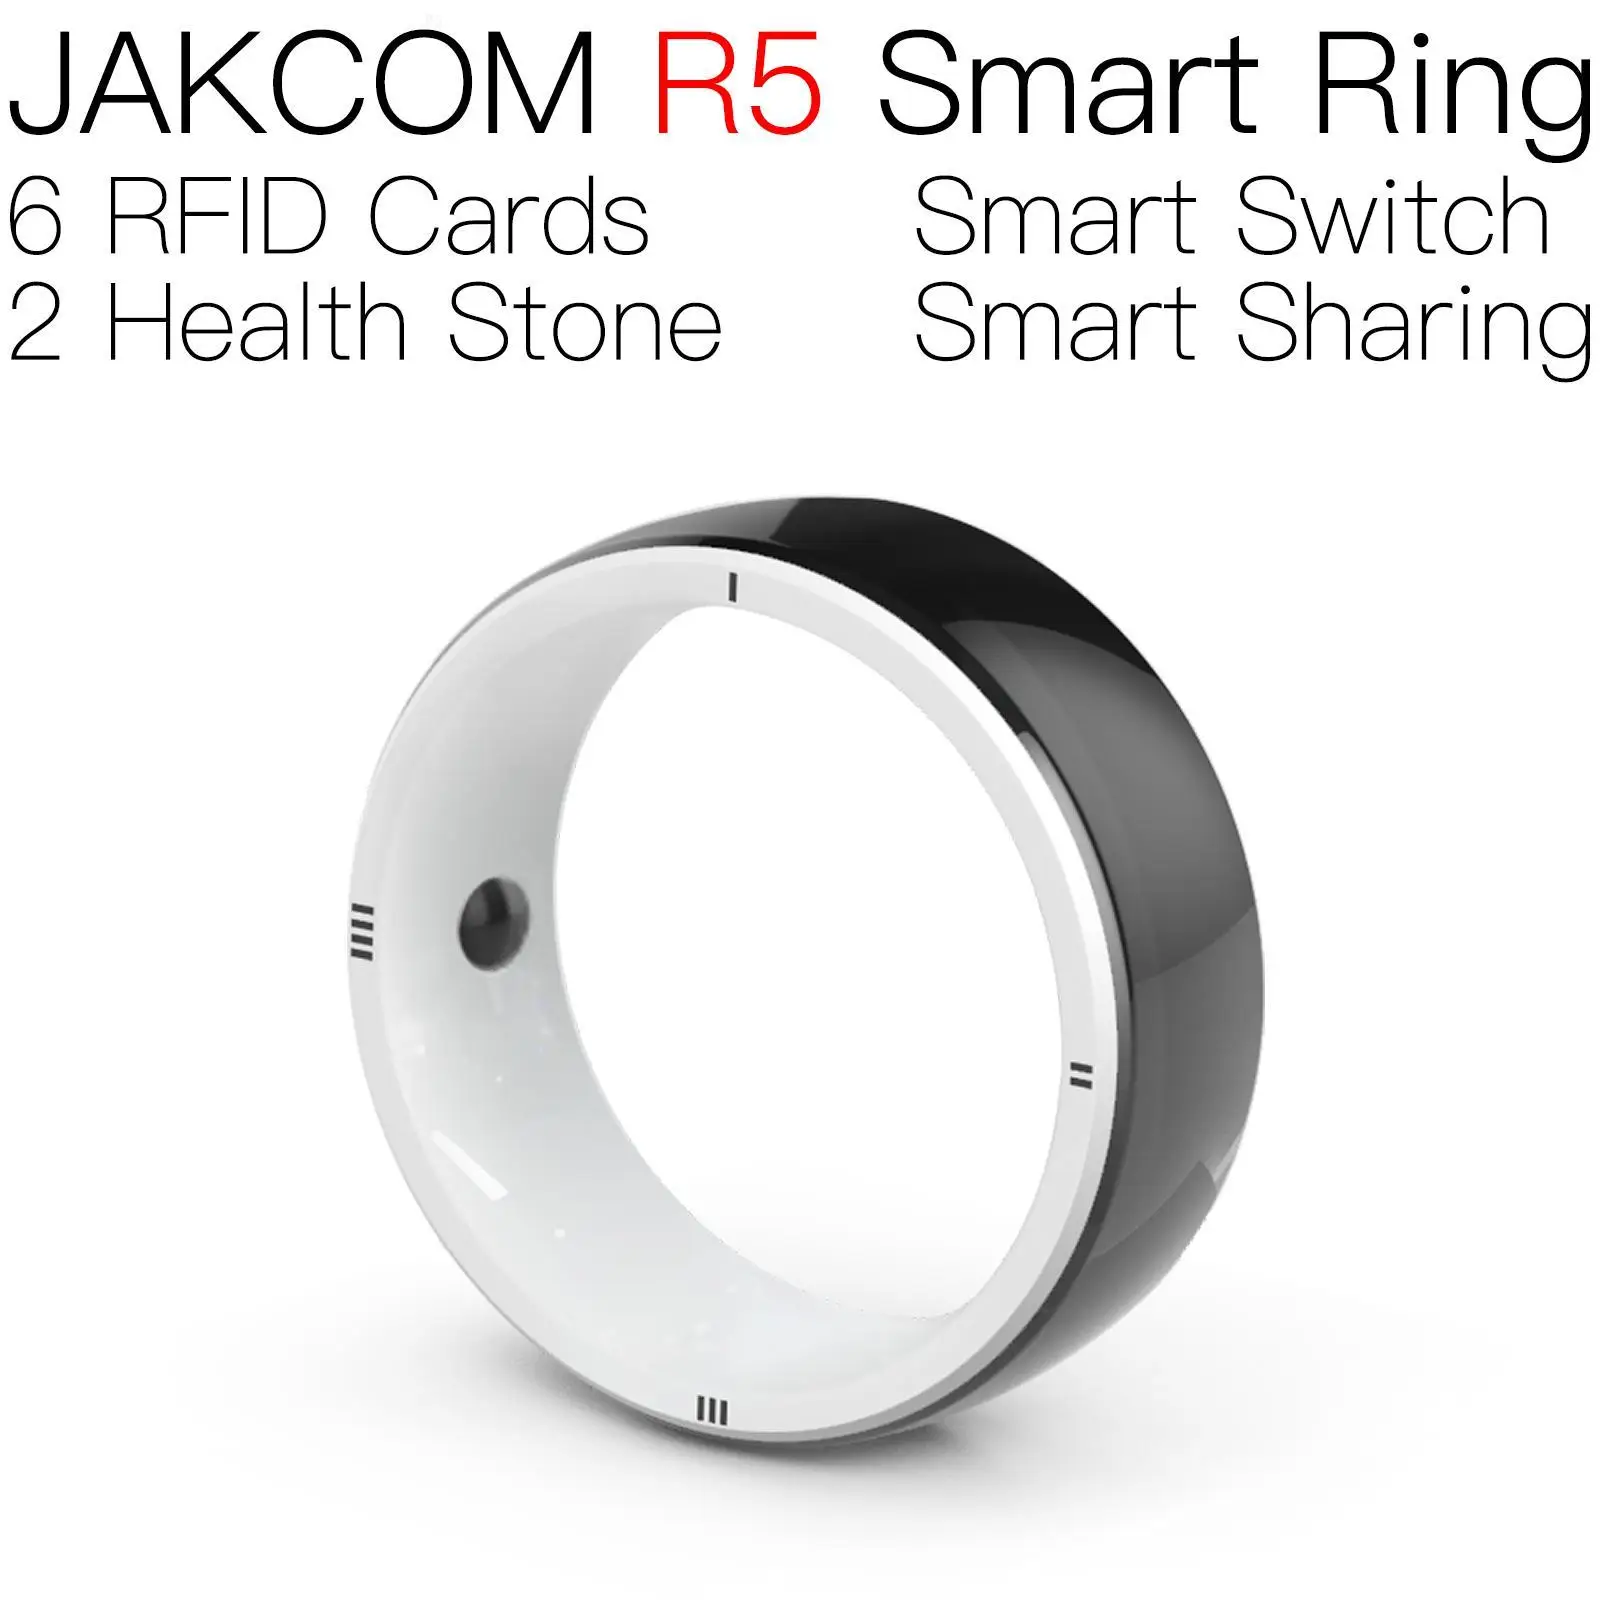 

JAKCOM R5 Smart Ring better than 3 fitness band 115plus gt neo2 alexia mosquito killer 4 bracelet s1